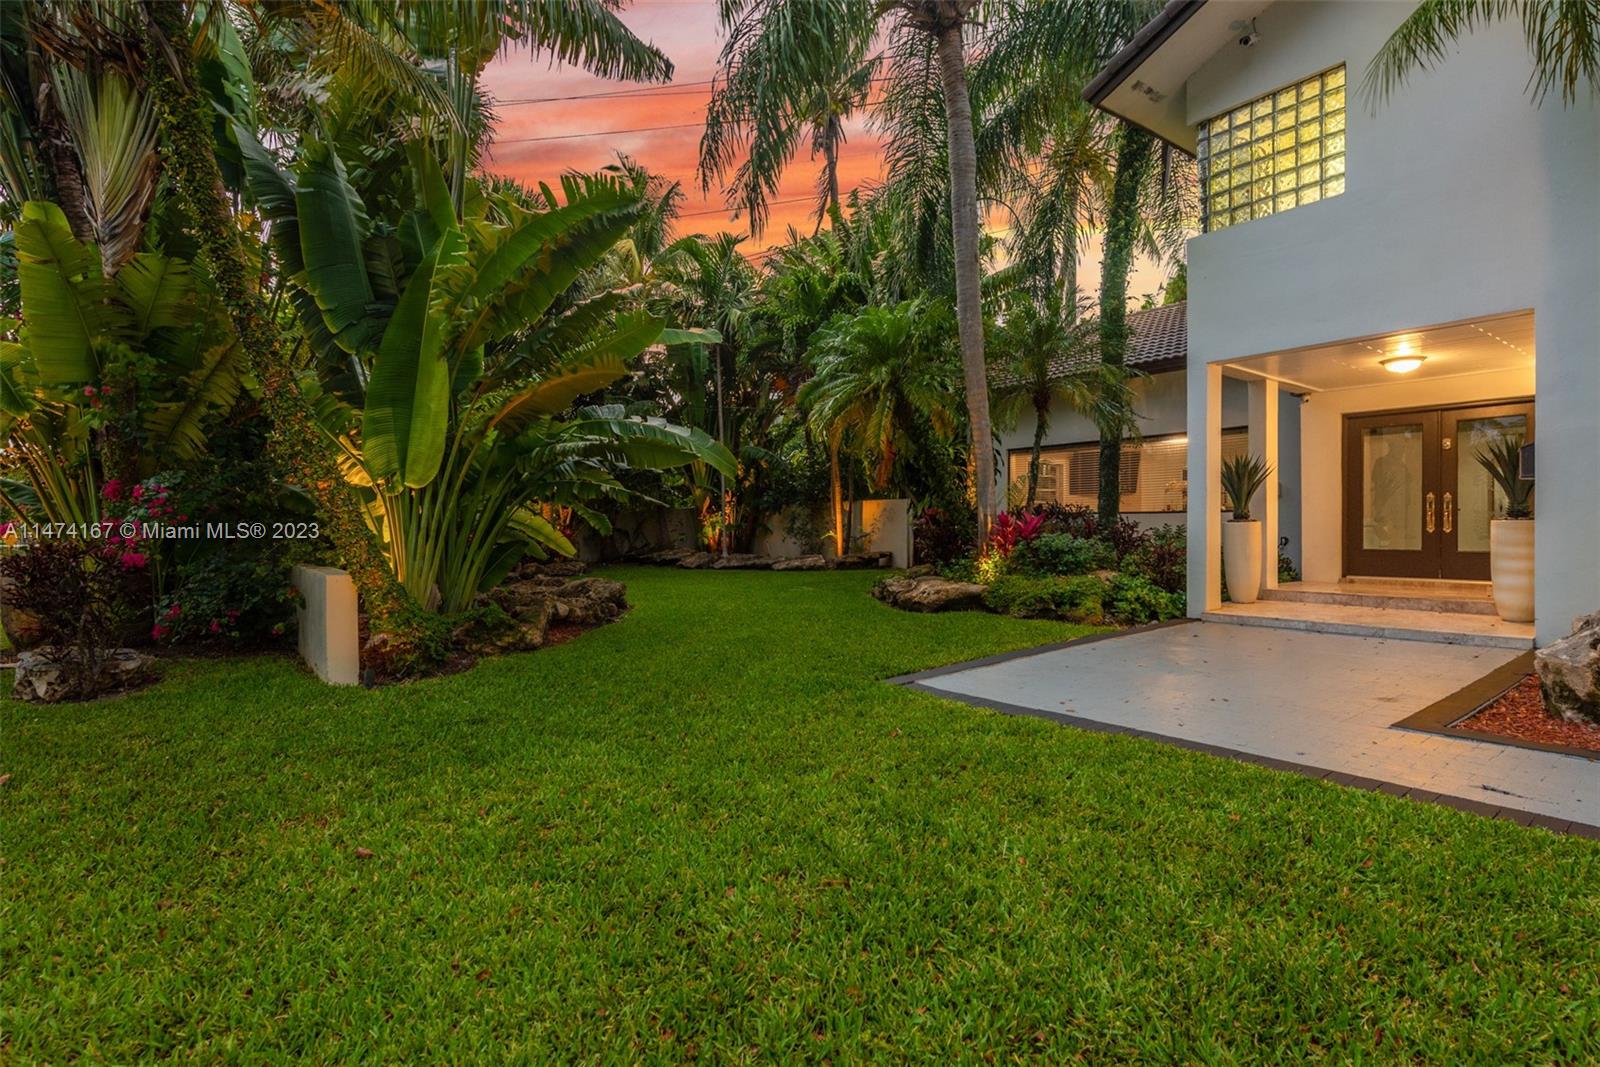 Property for Sale at 1173 Ne 104th St, Miami Shores, Miami-Dade County, Florida - Bedrooms: 5 
Bathrooms: 4  - $3,100,000